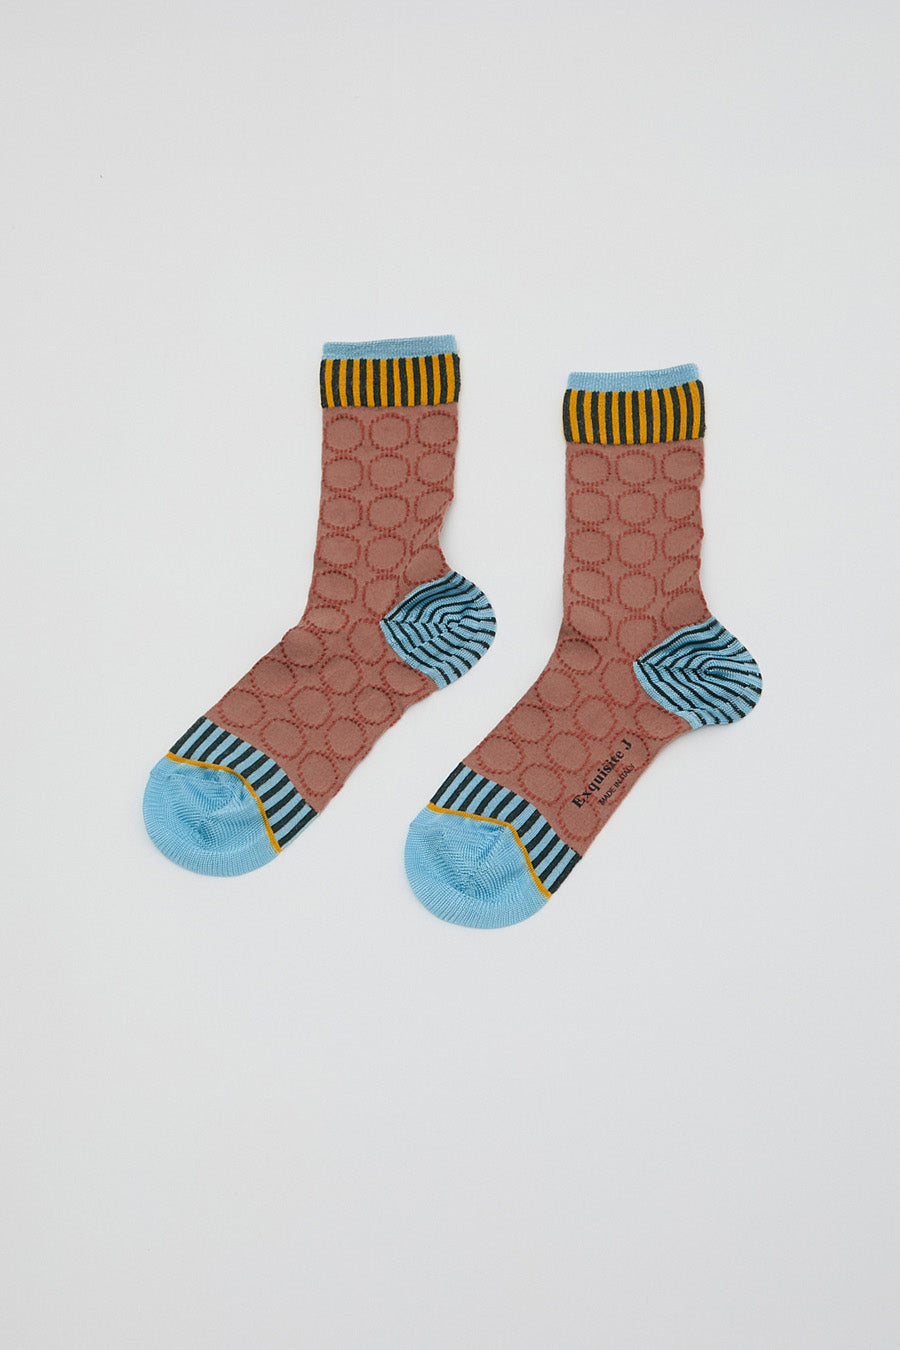 Exquisite J Jacquard Circles Socks in MochaExquisite J Jacquard Circles Socks in Mocha